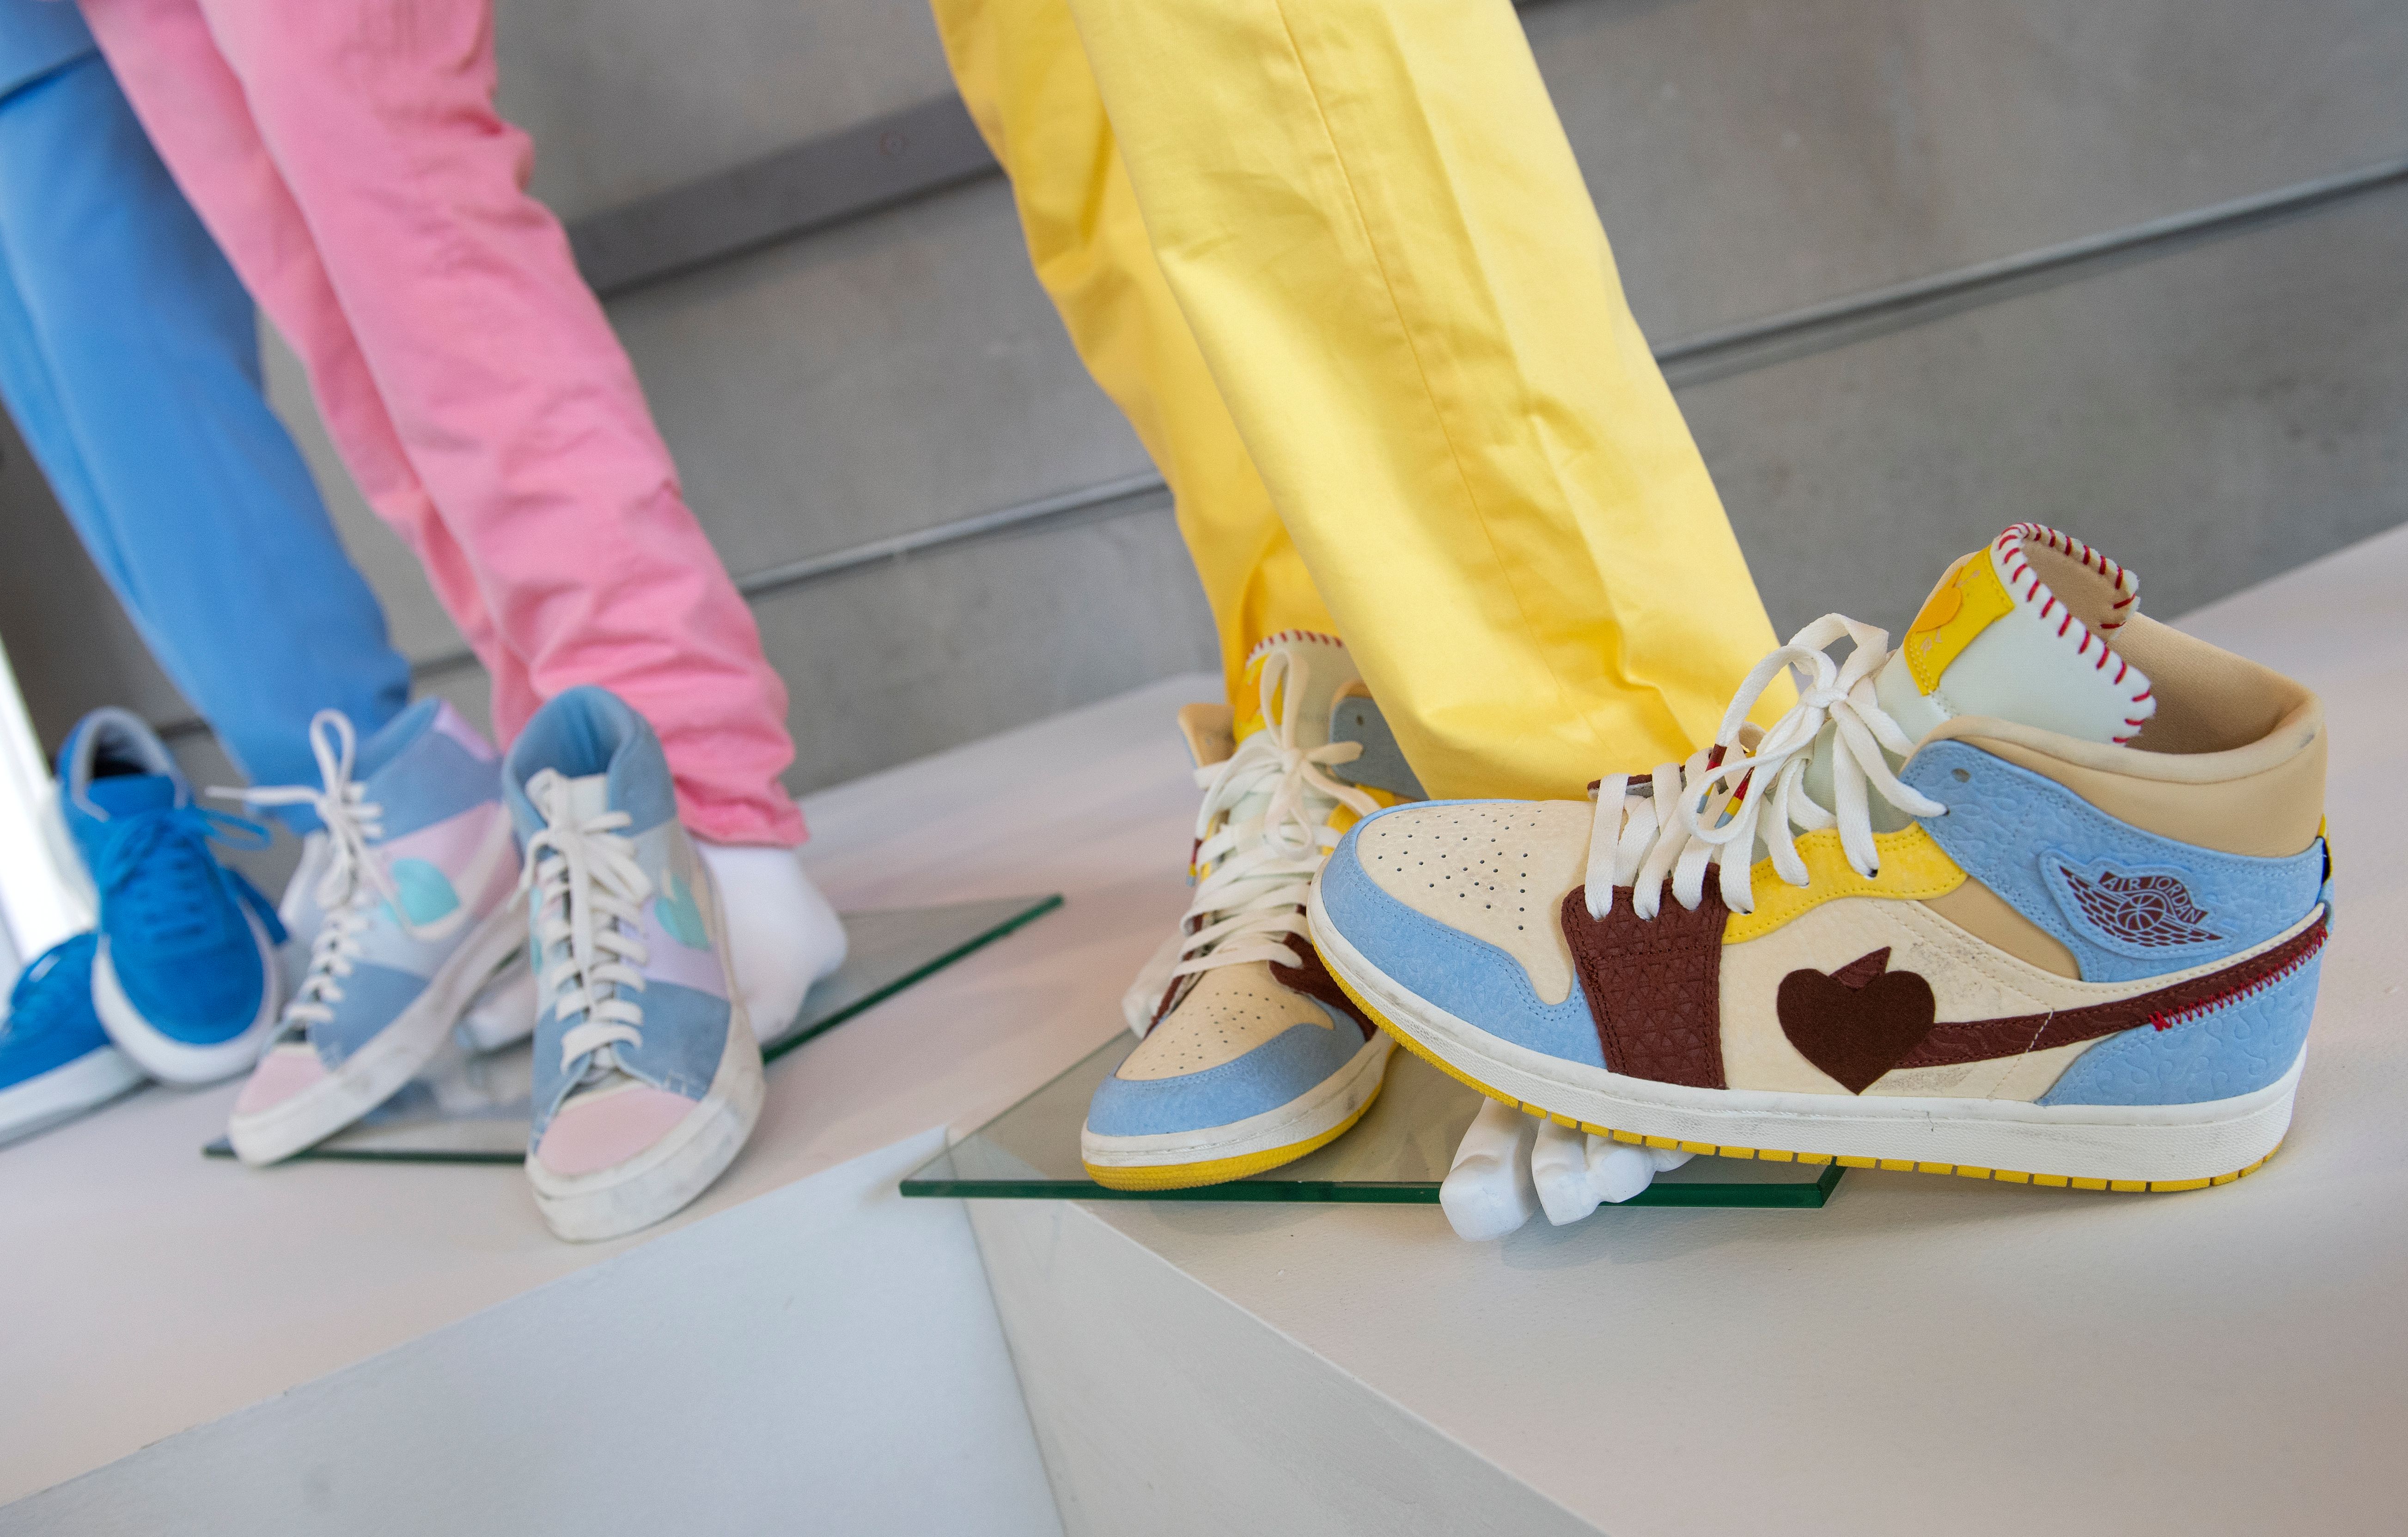 Custom Nike Air Jordan worn by K-pop BTS band member Suga, Custom Nike Air worn by K-pop BTS band member Jin, and Blue converse All-Star worn by K-pop BTS band member V on their "Dynamite" music video